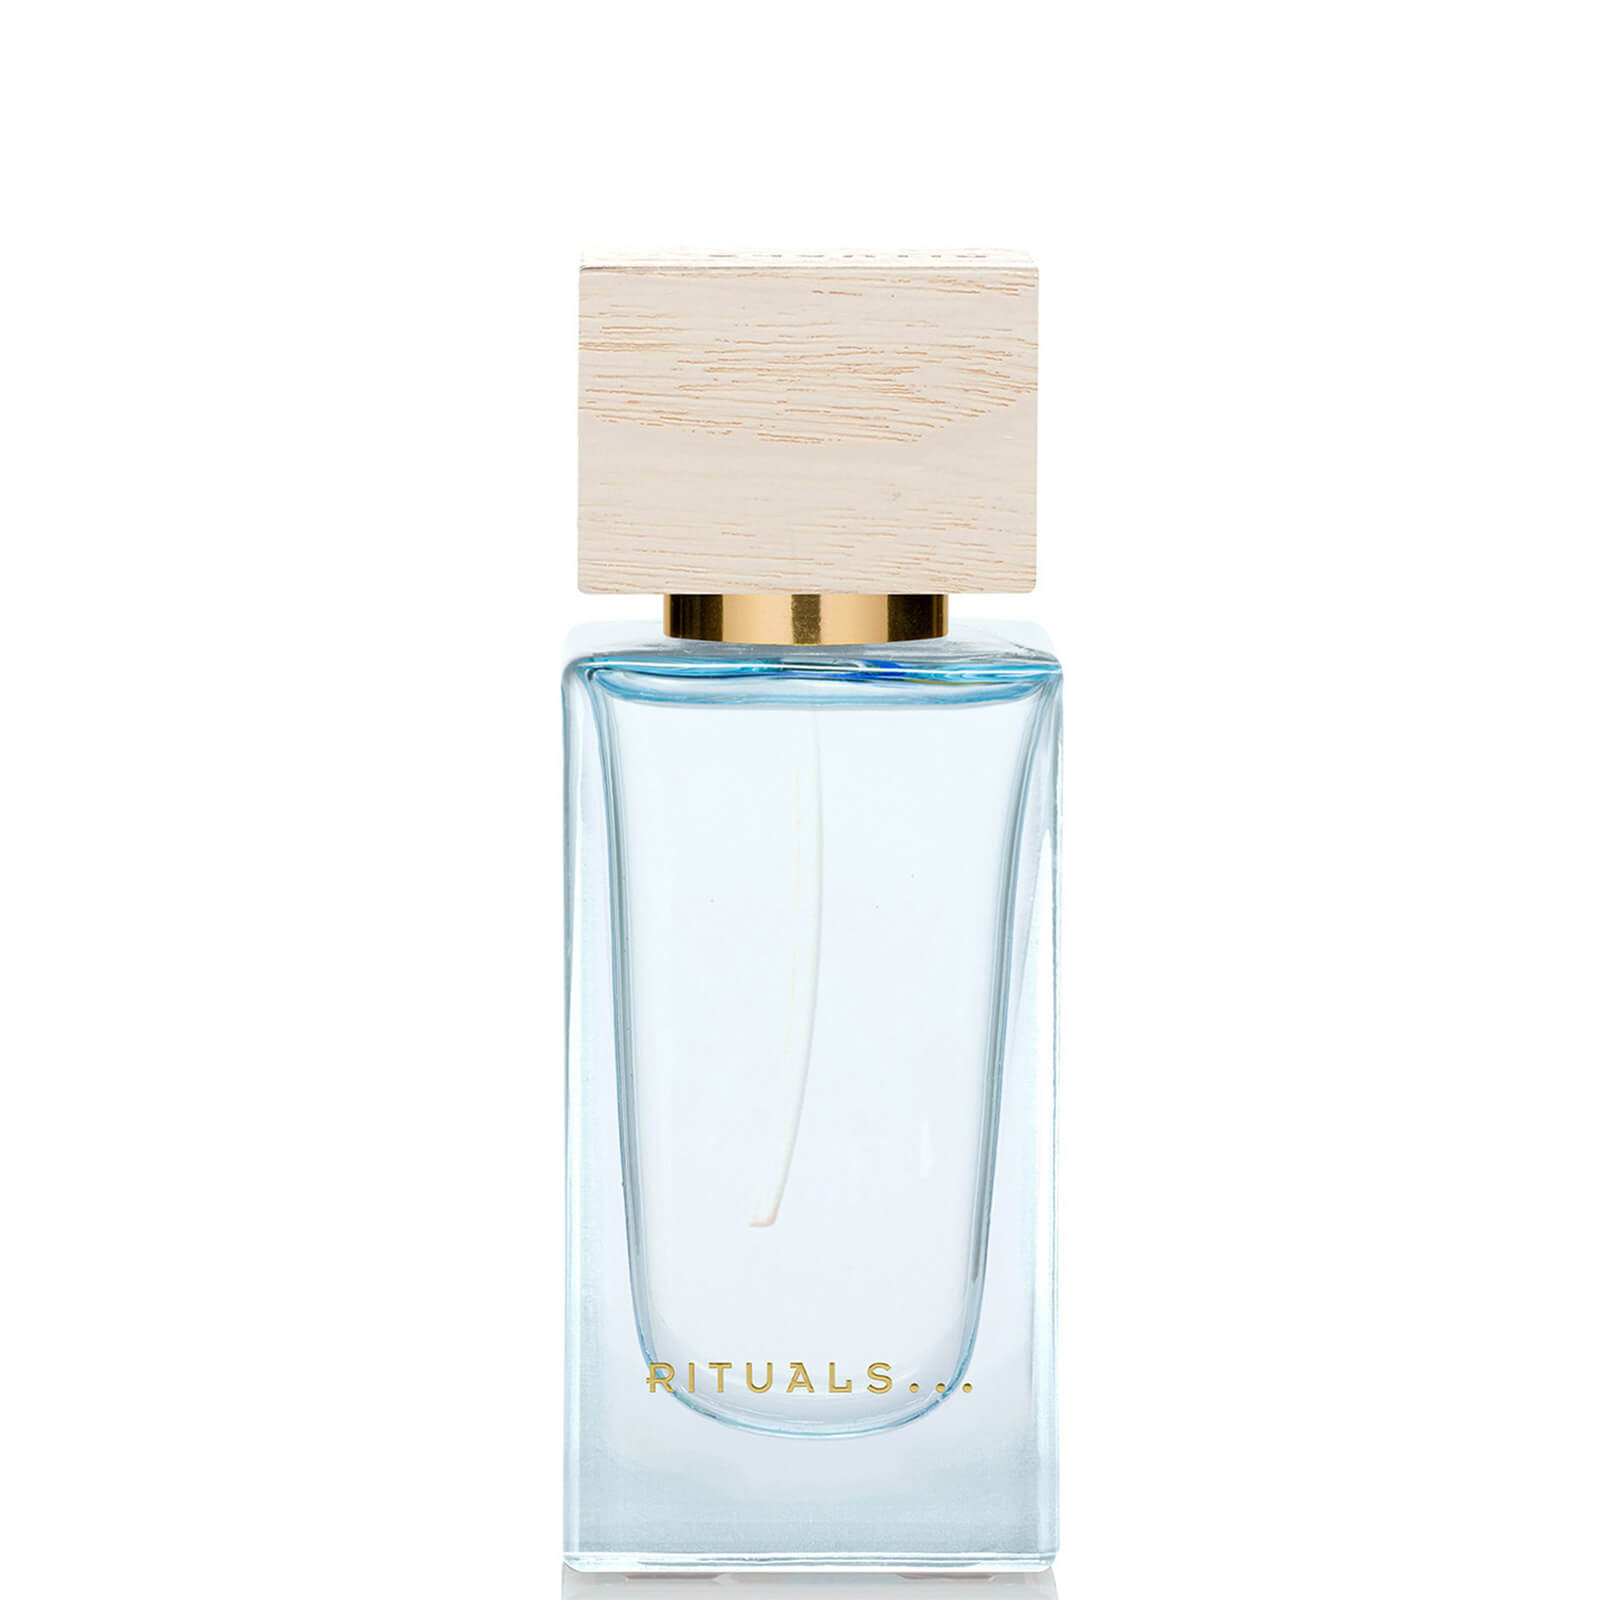 RITUALS Oriental Essences Travel Perfume Océan Infini, eau de parfum i reisestørrelse 15 ml